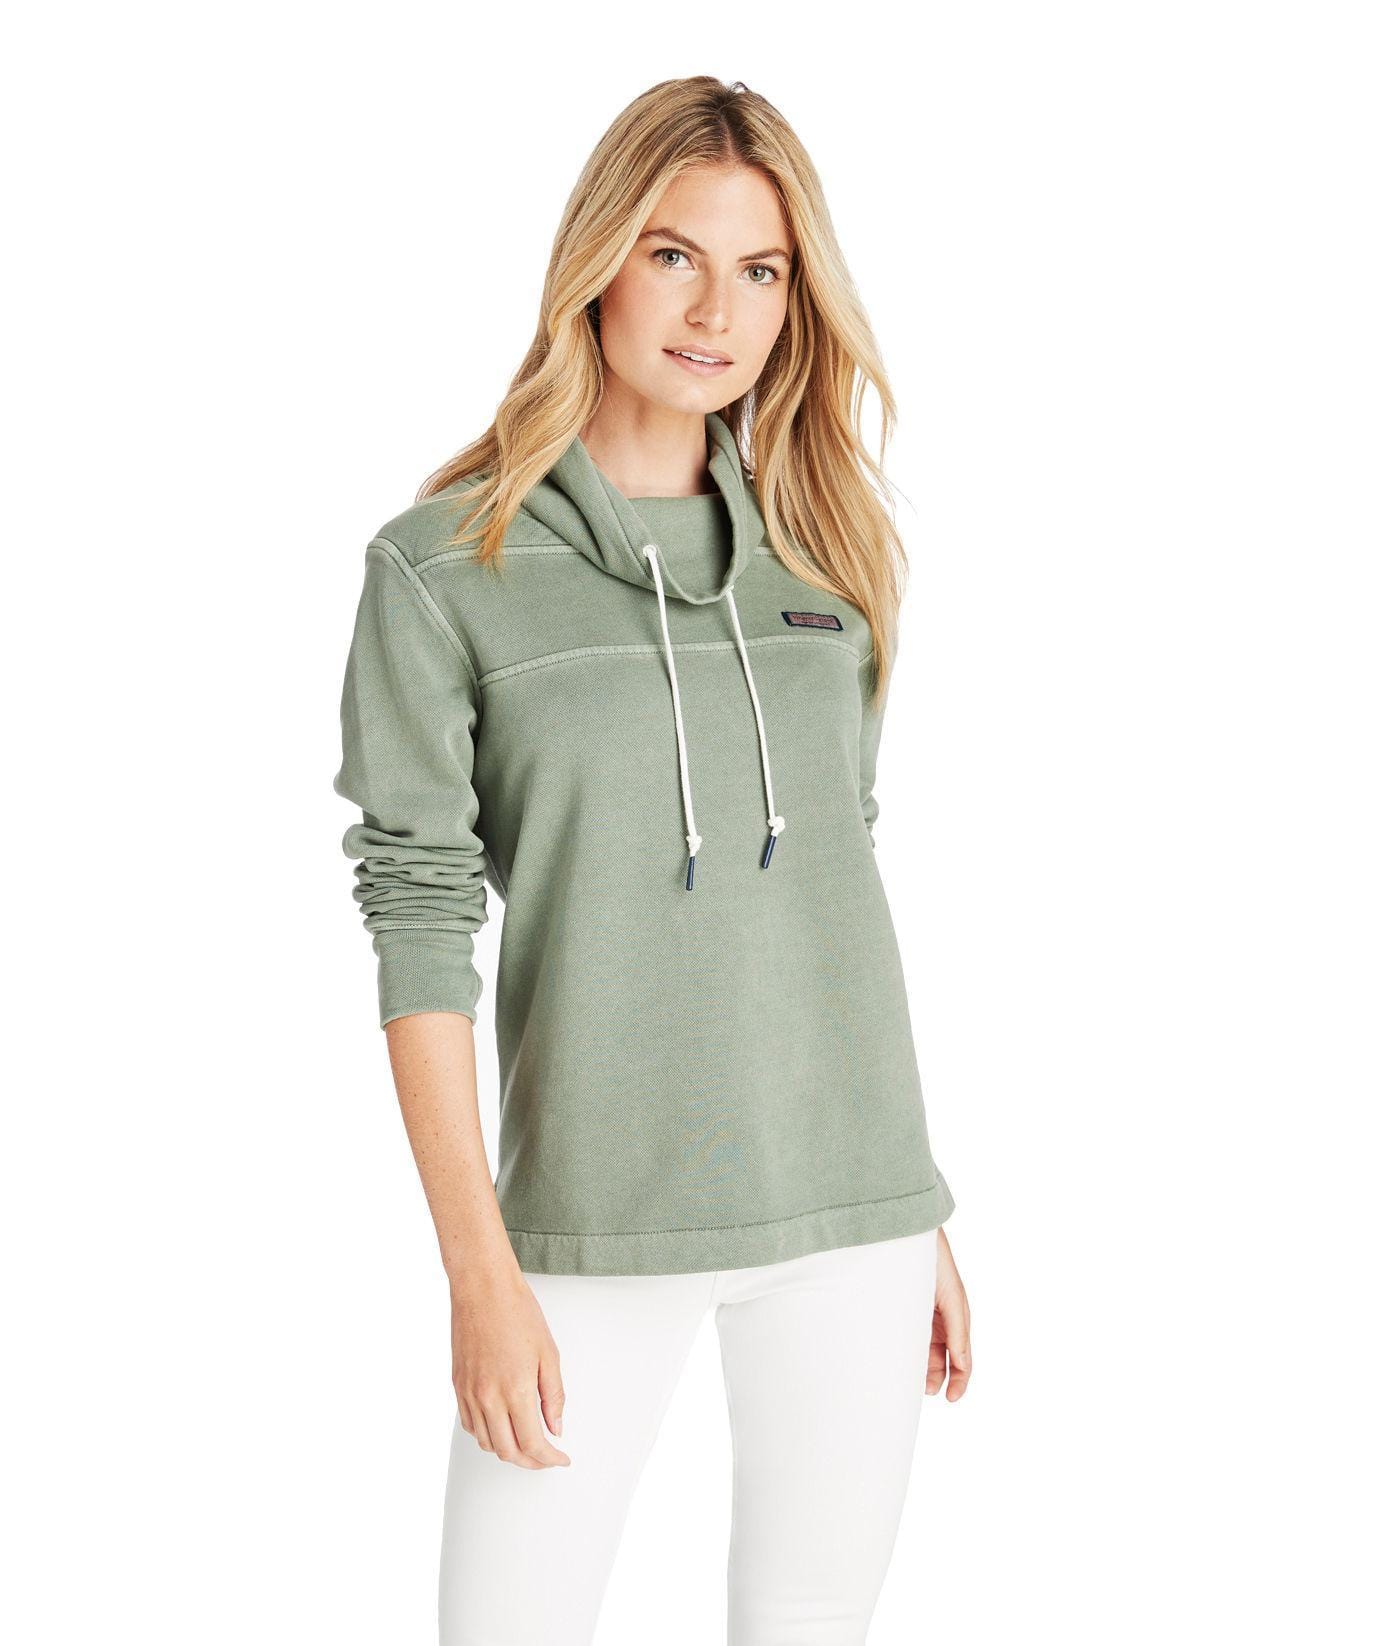  Olive Green Vineyard Vines, Women's Garment-Dyed Funnel-Neck Shep Shirt (Olive Green)